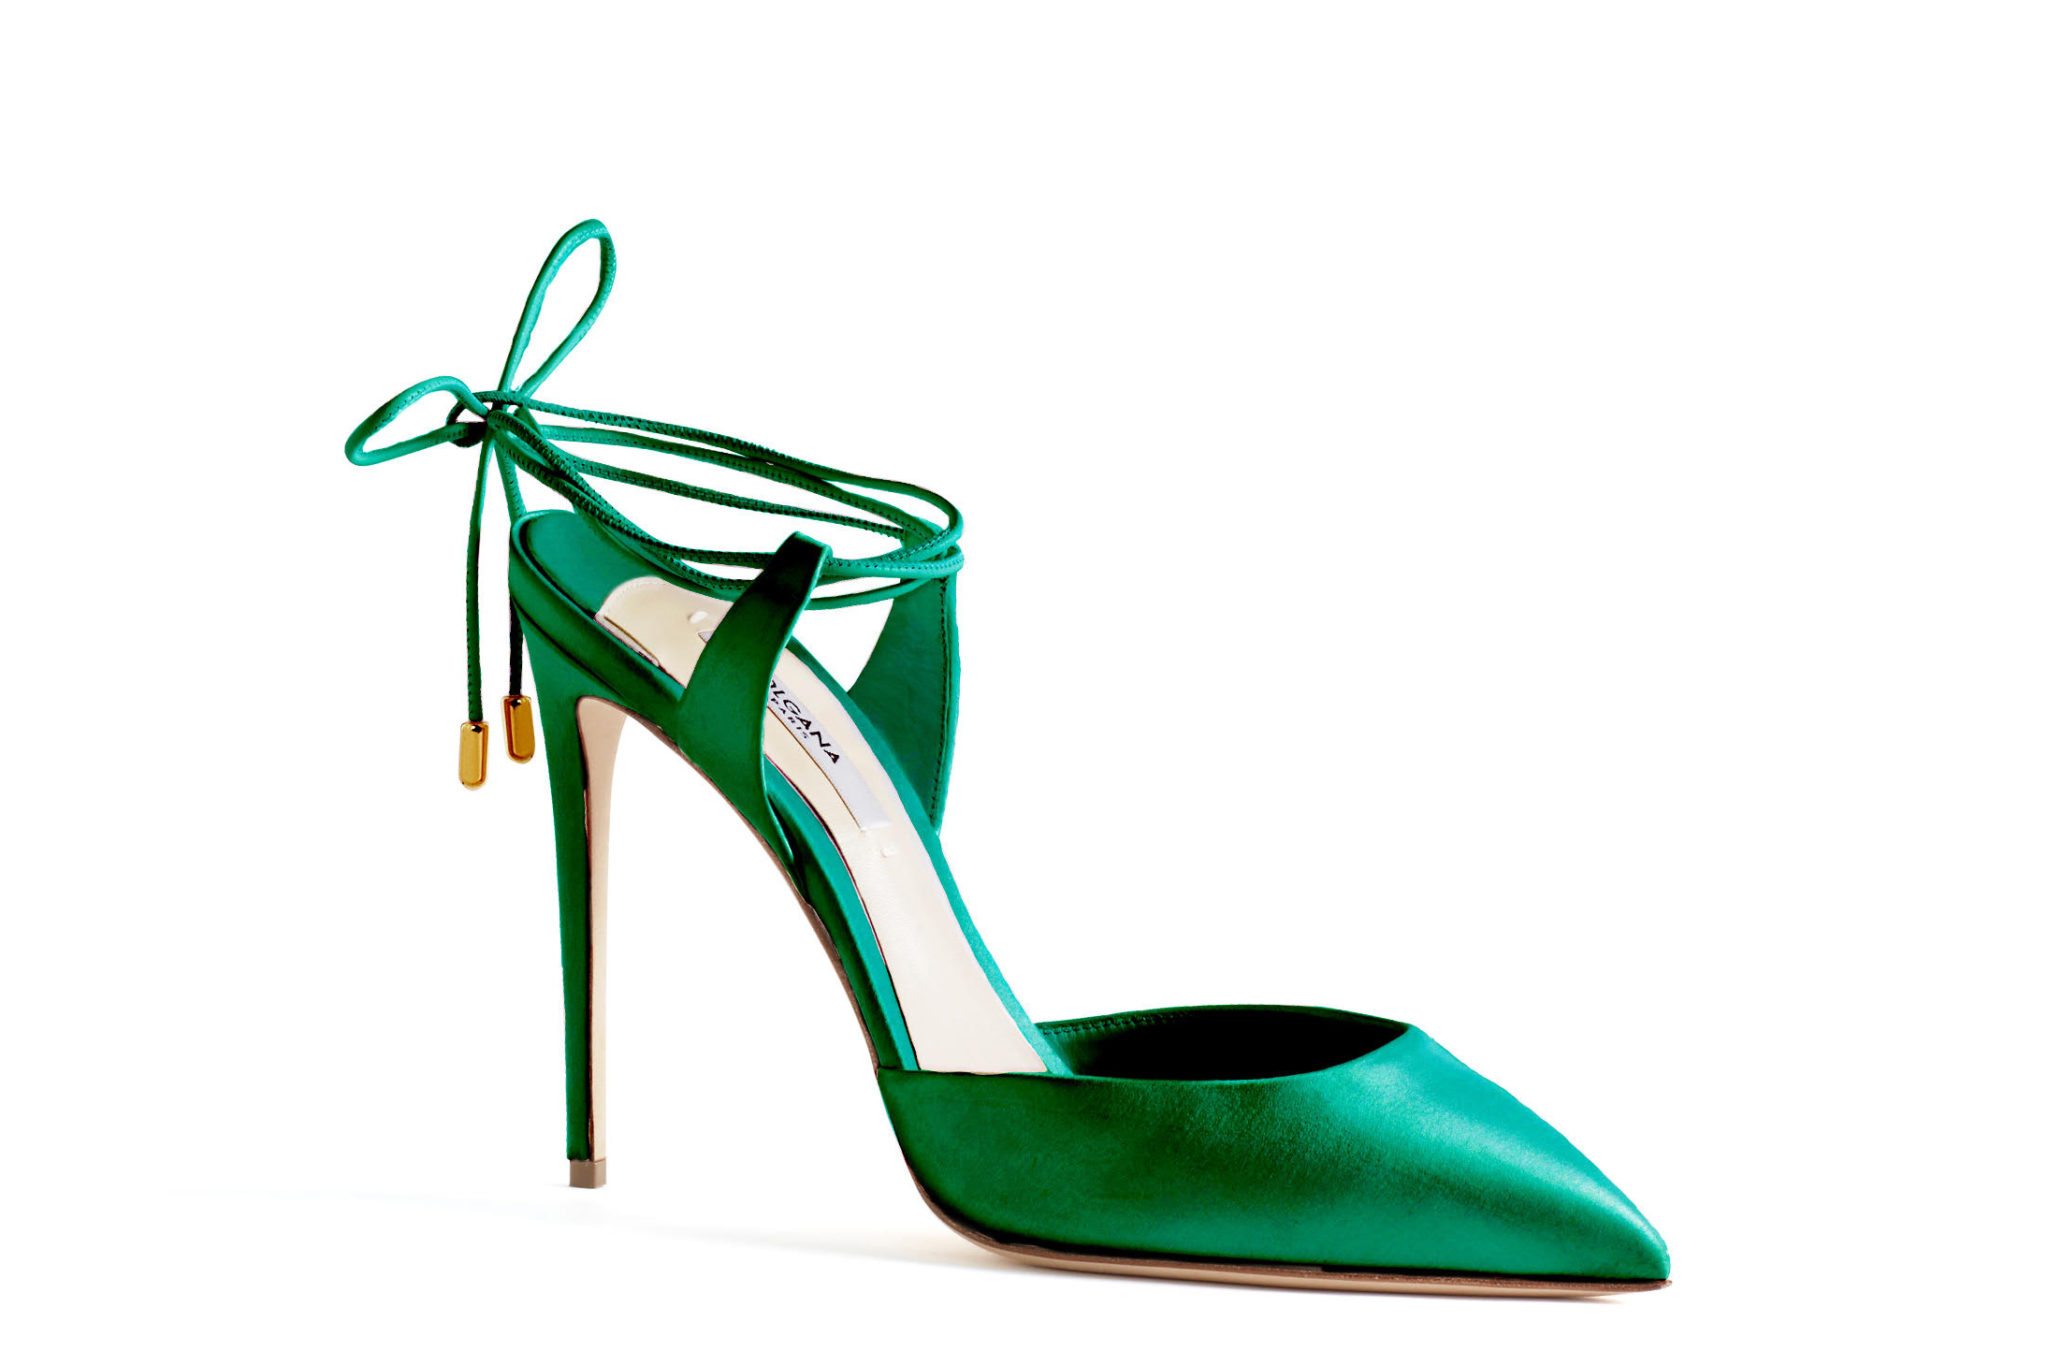 green satin shoe